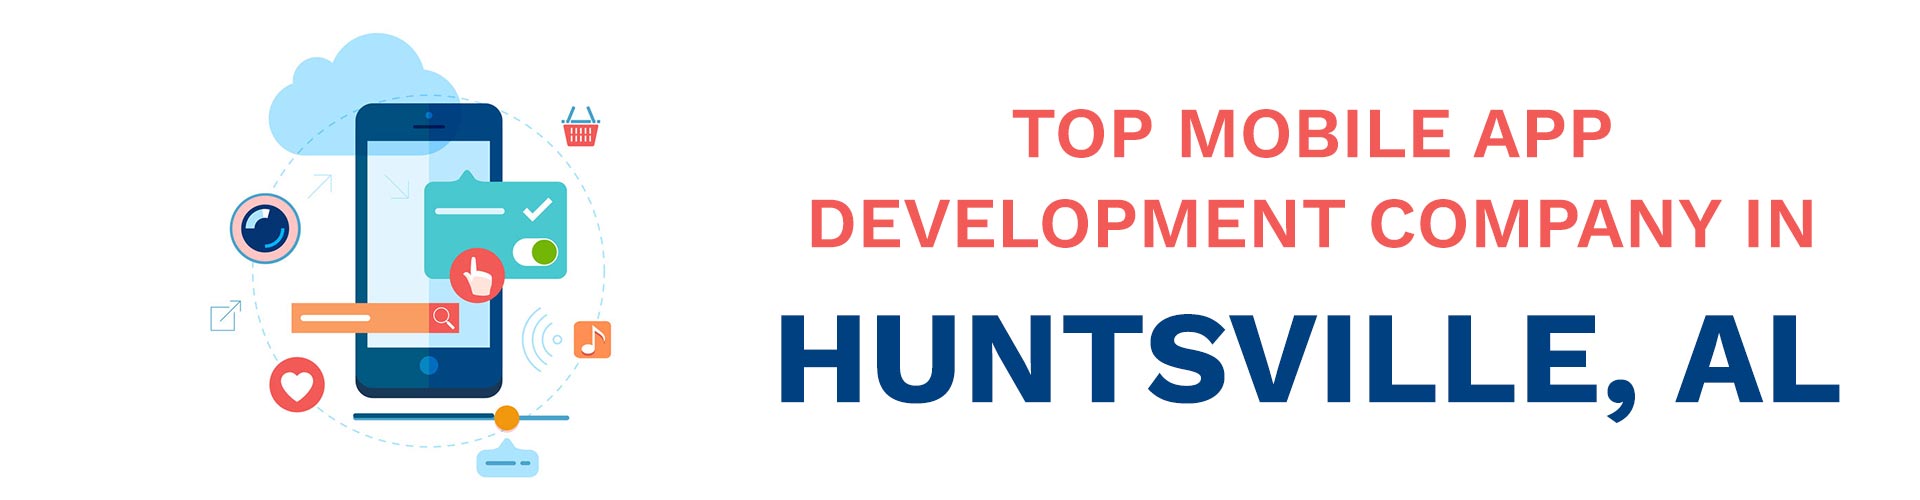 mobile app development company huntsville